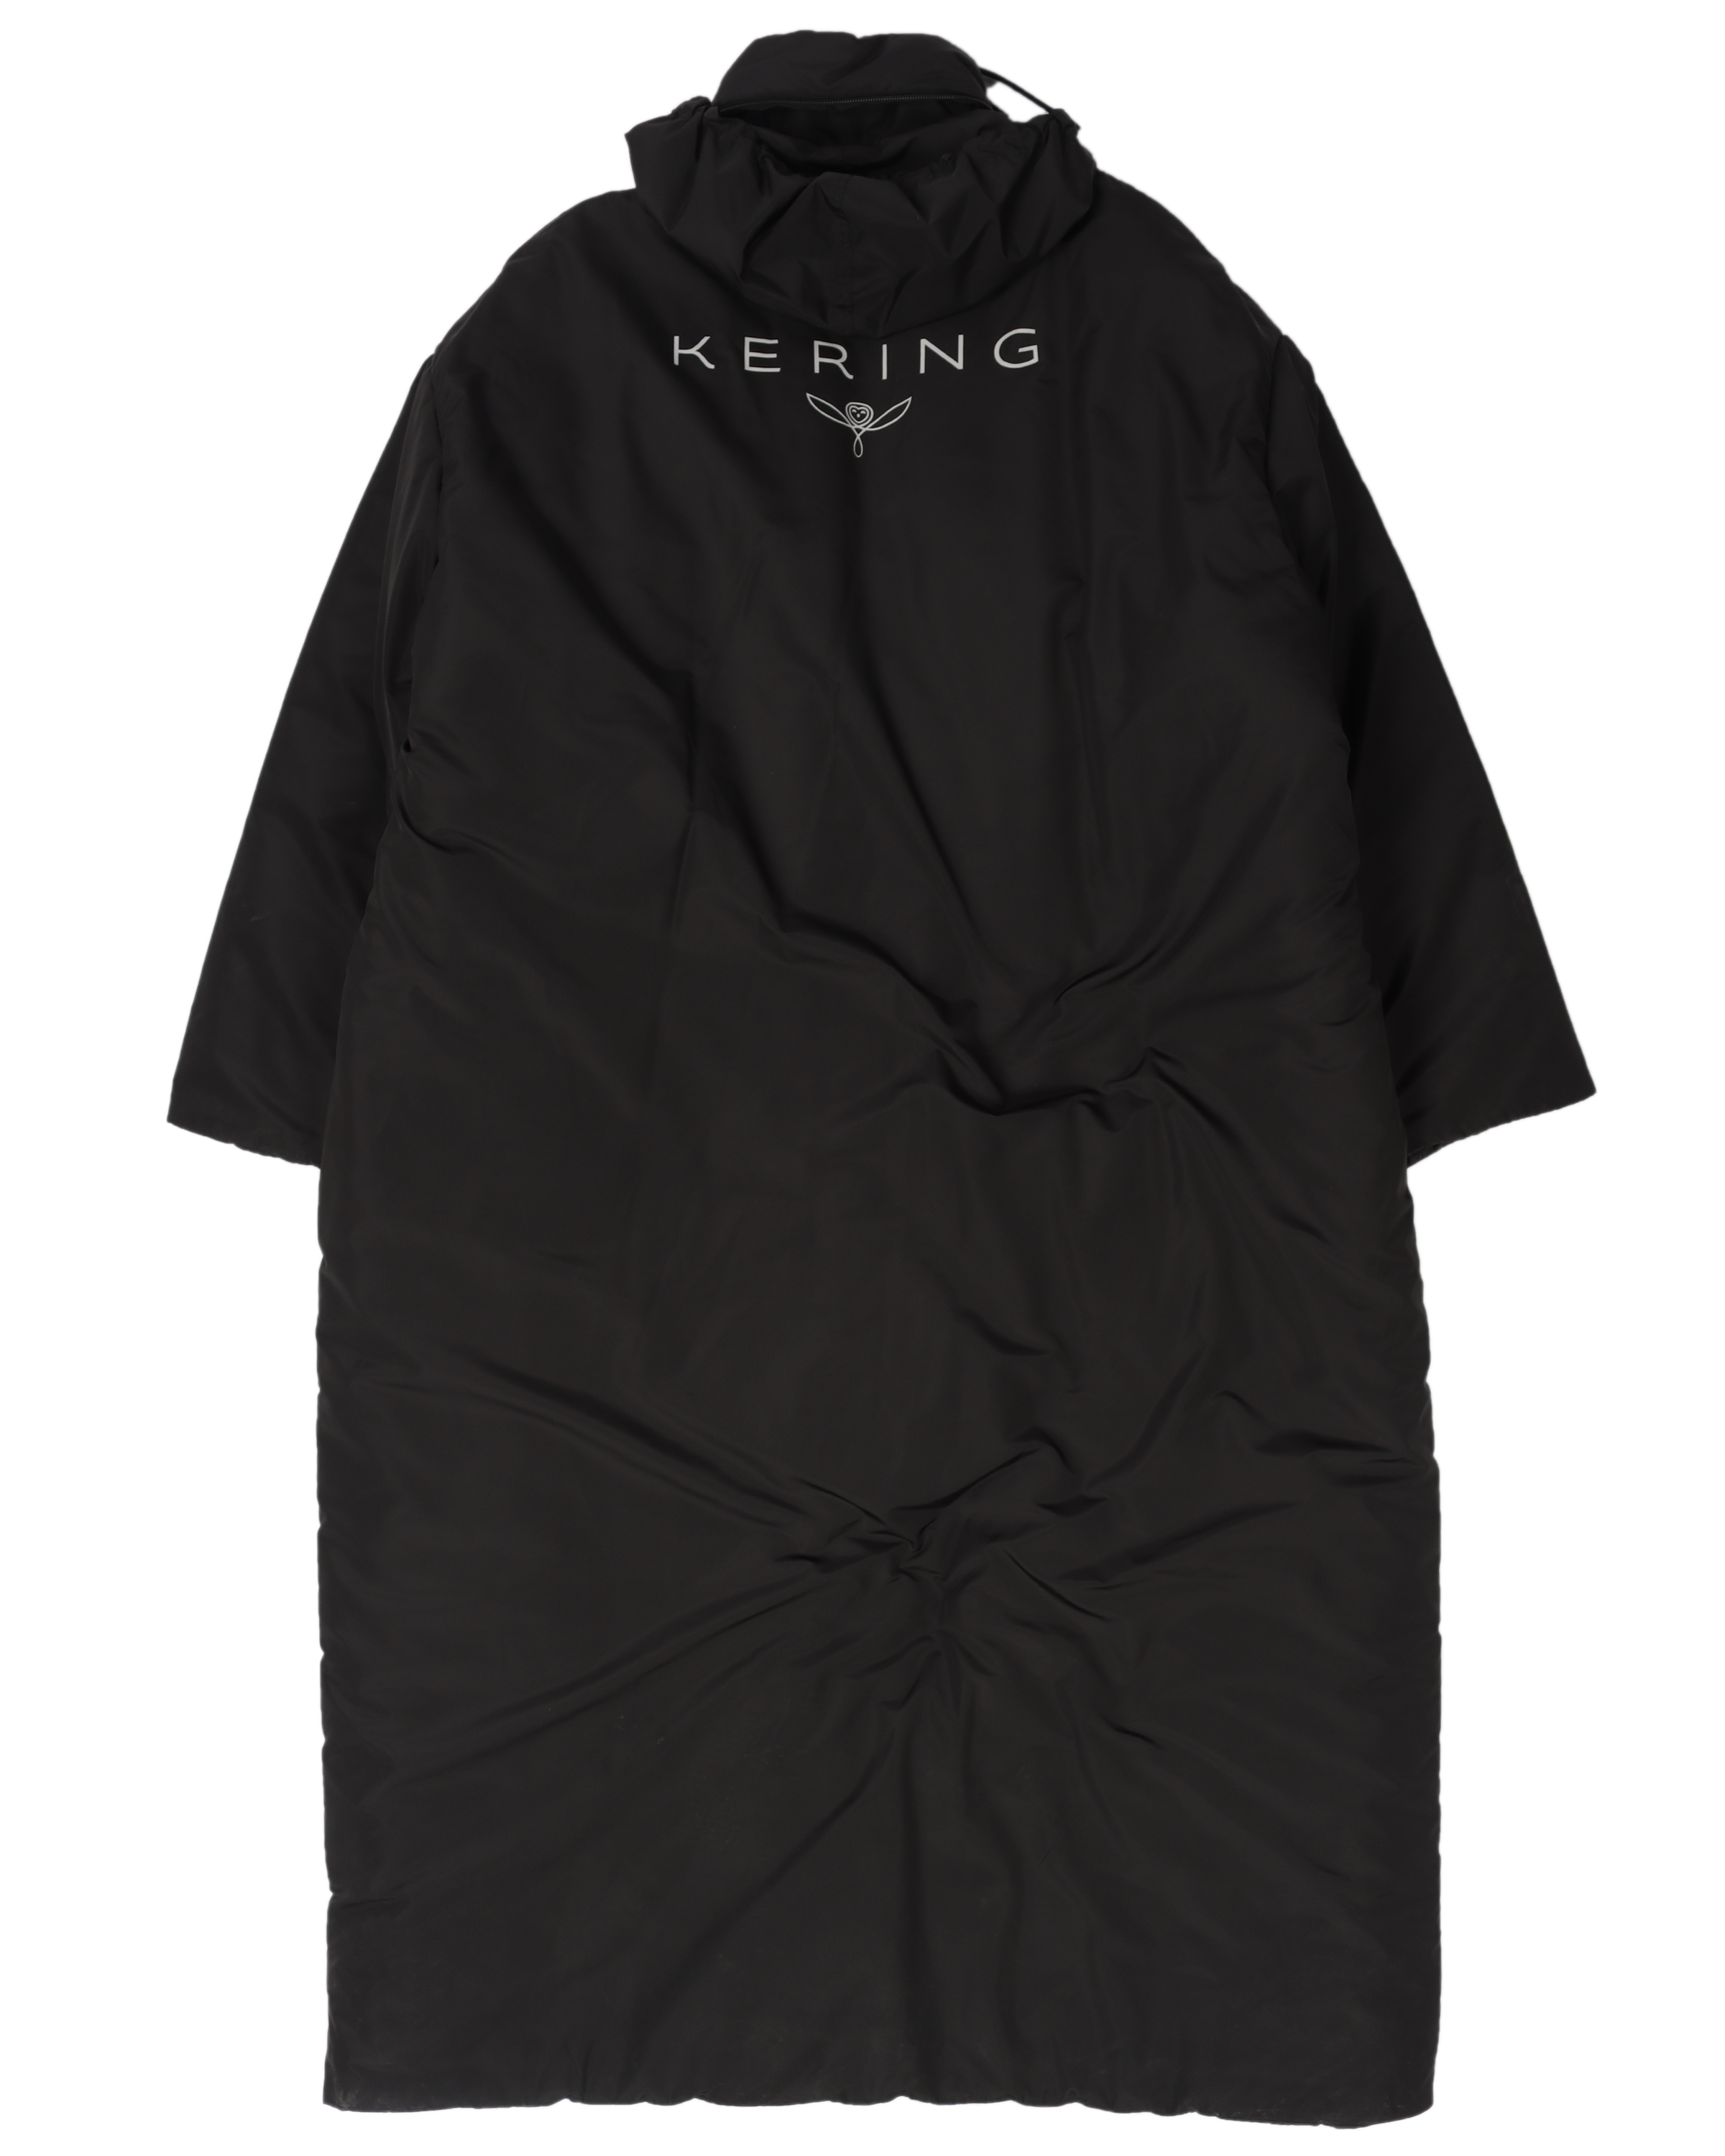 "Kering" Padded Raincoat (2017)